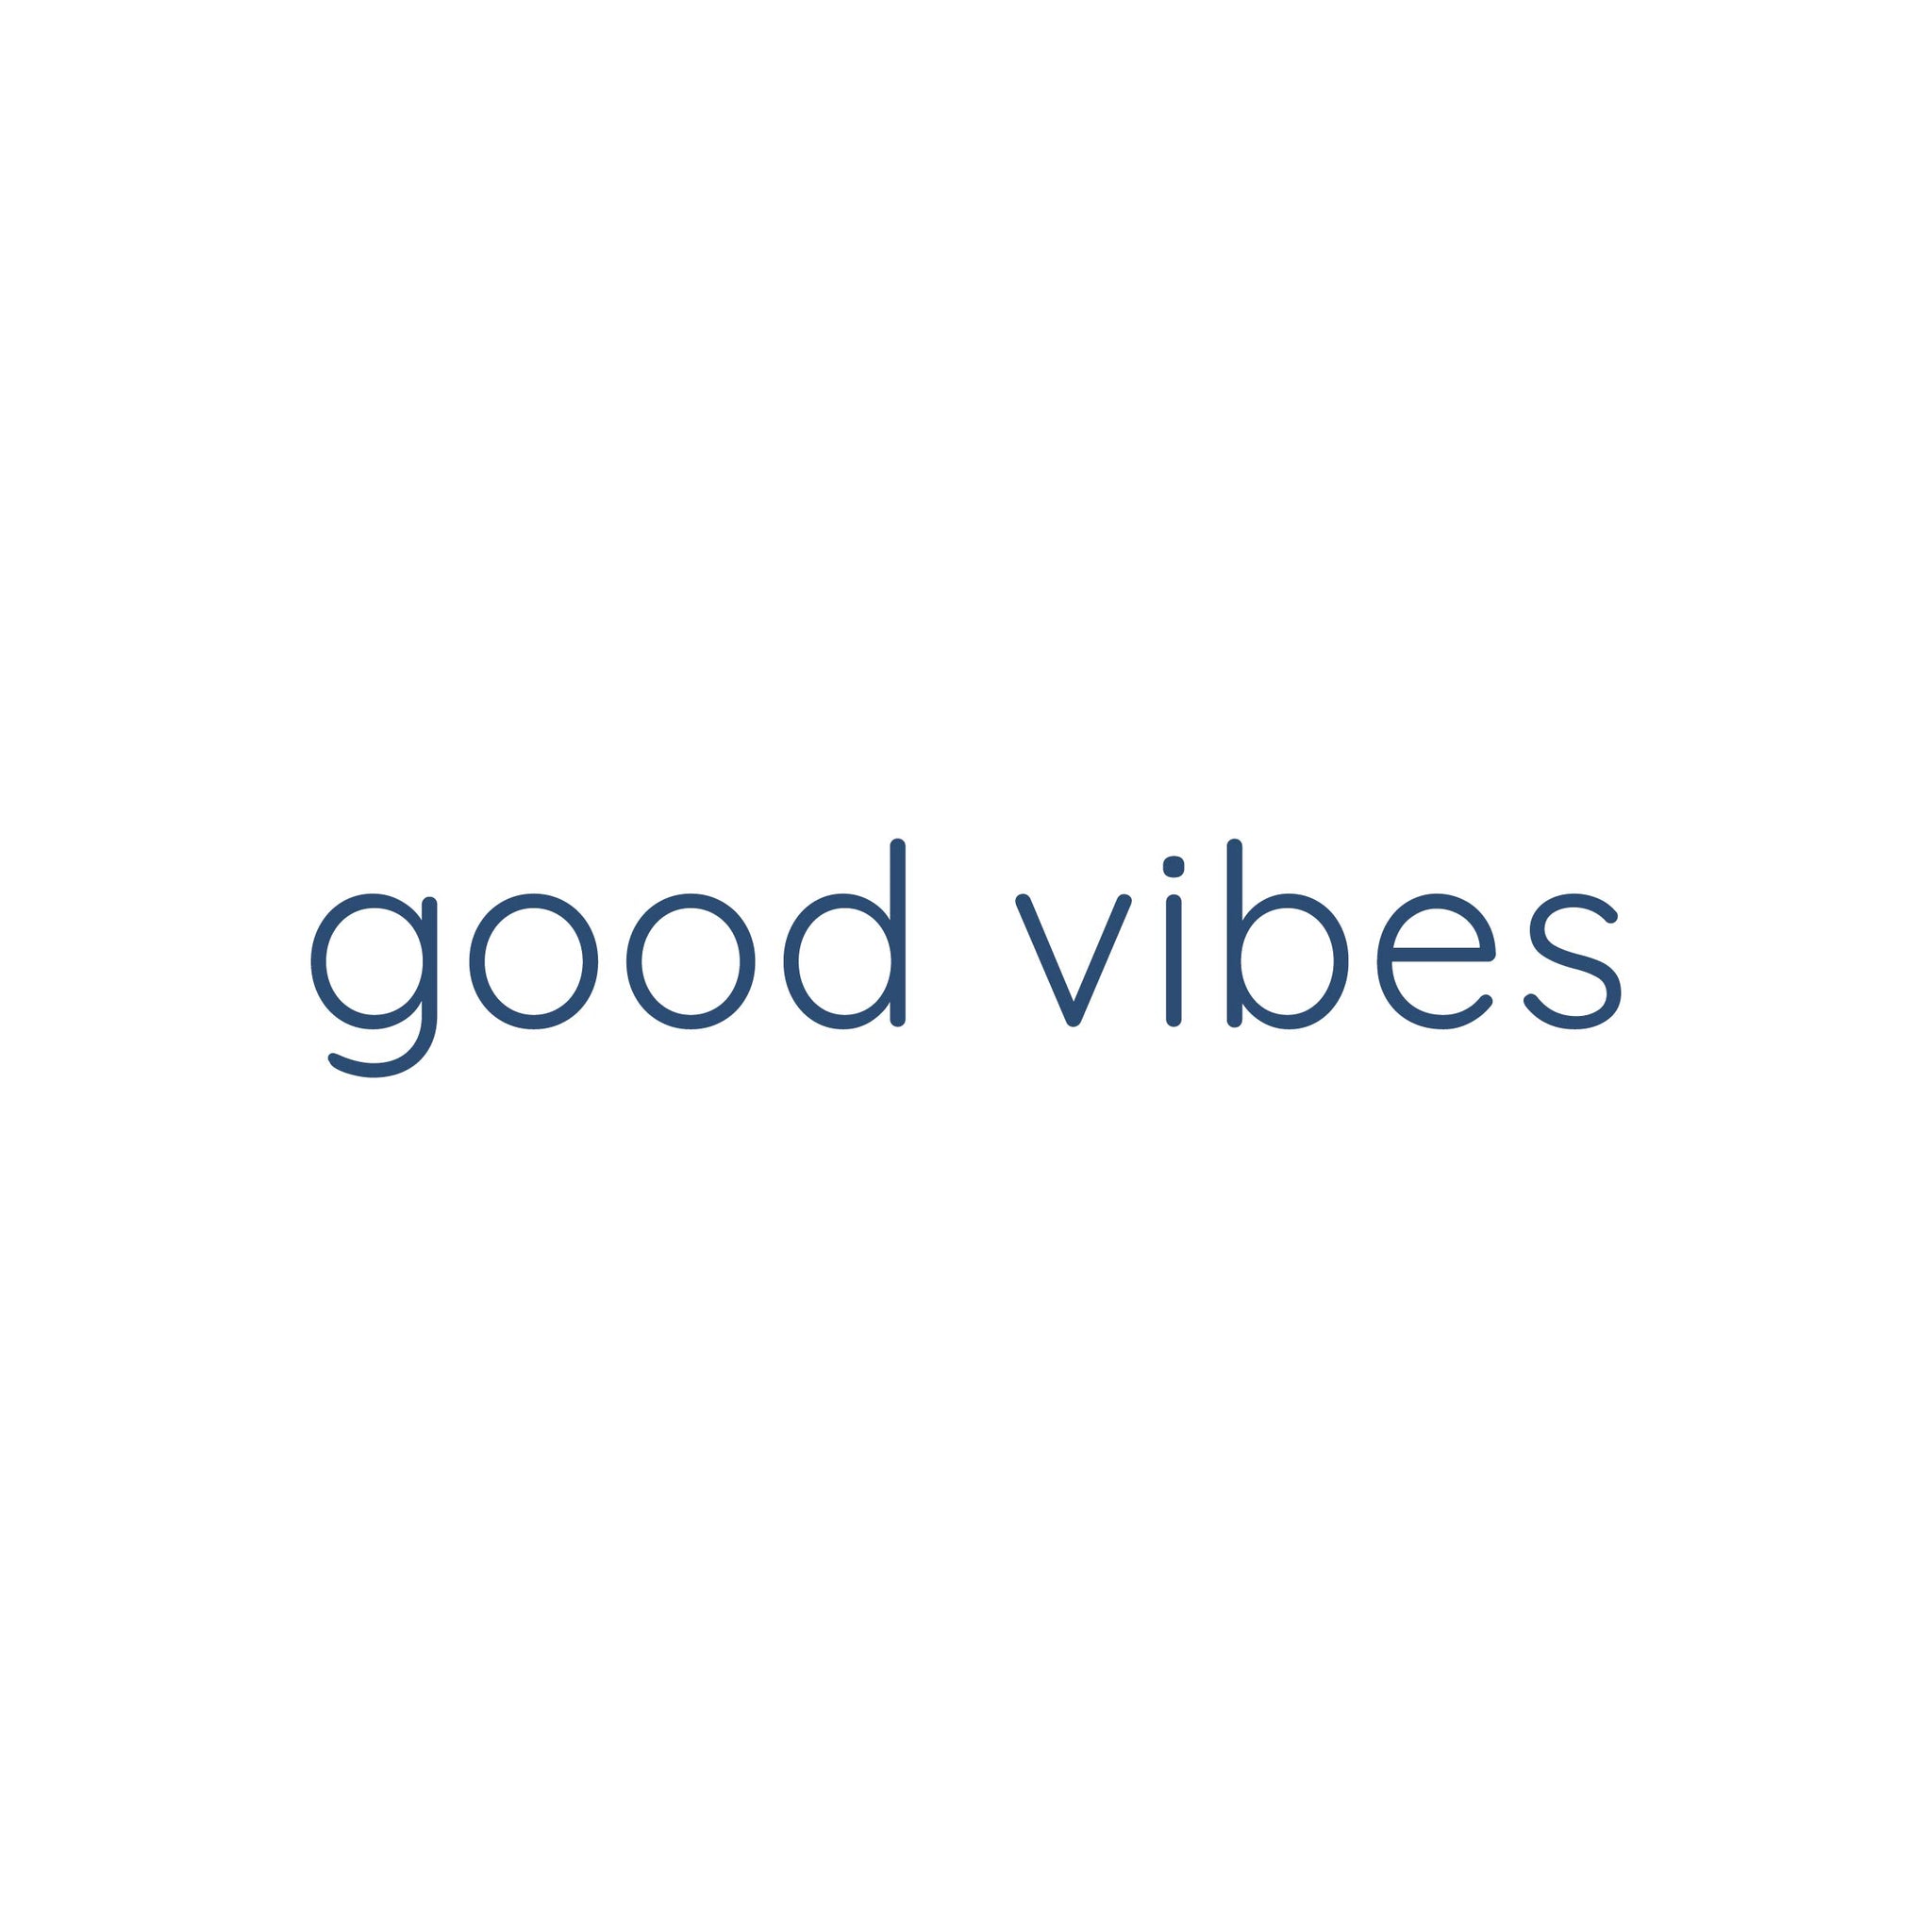 Good vibes - Tatuaje temporal